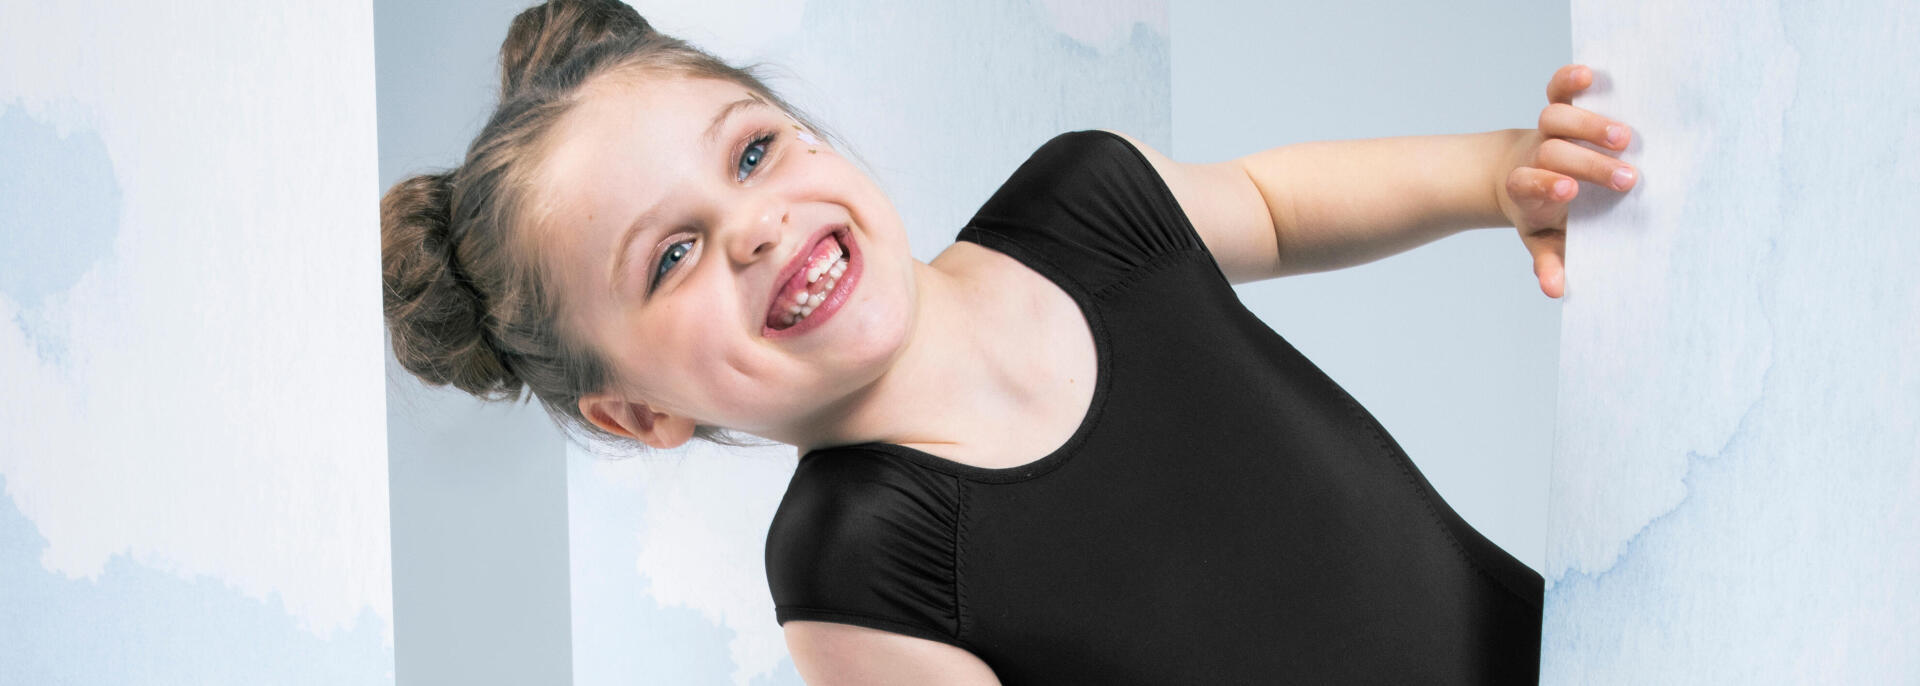 little girl smiling in a bodysuit for gymnastics